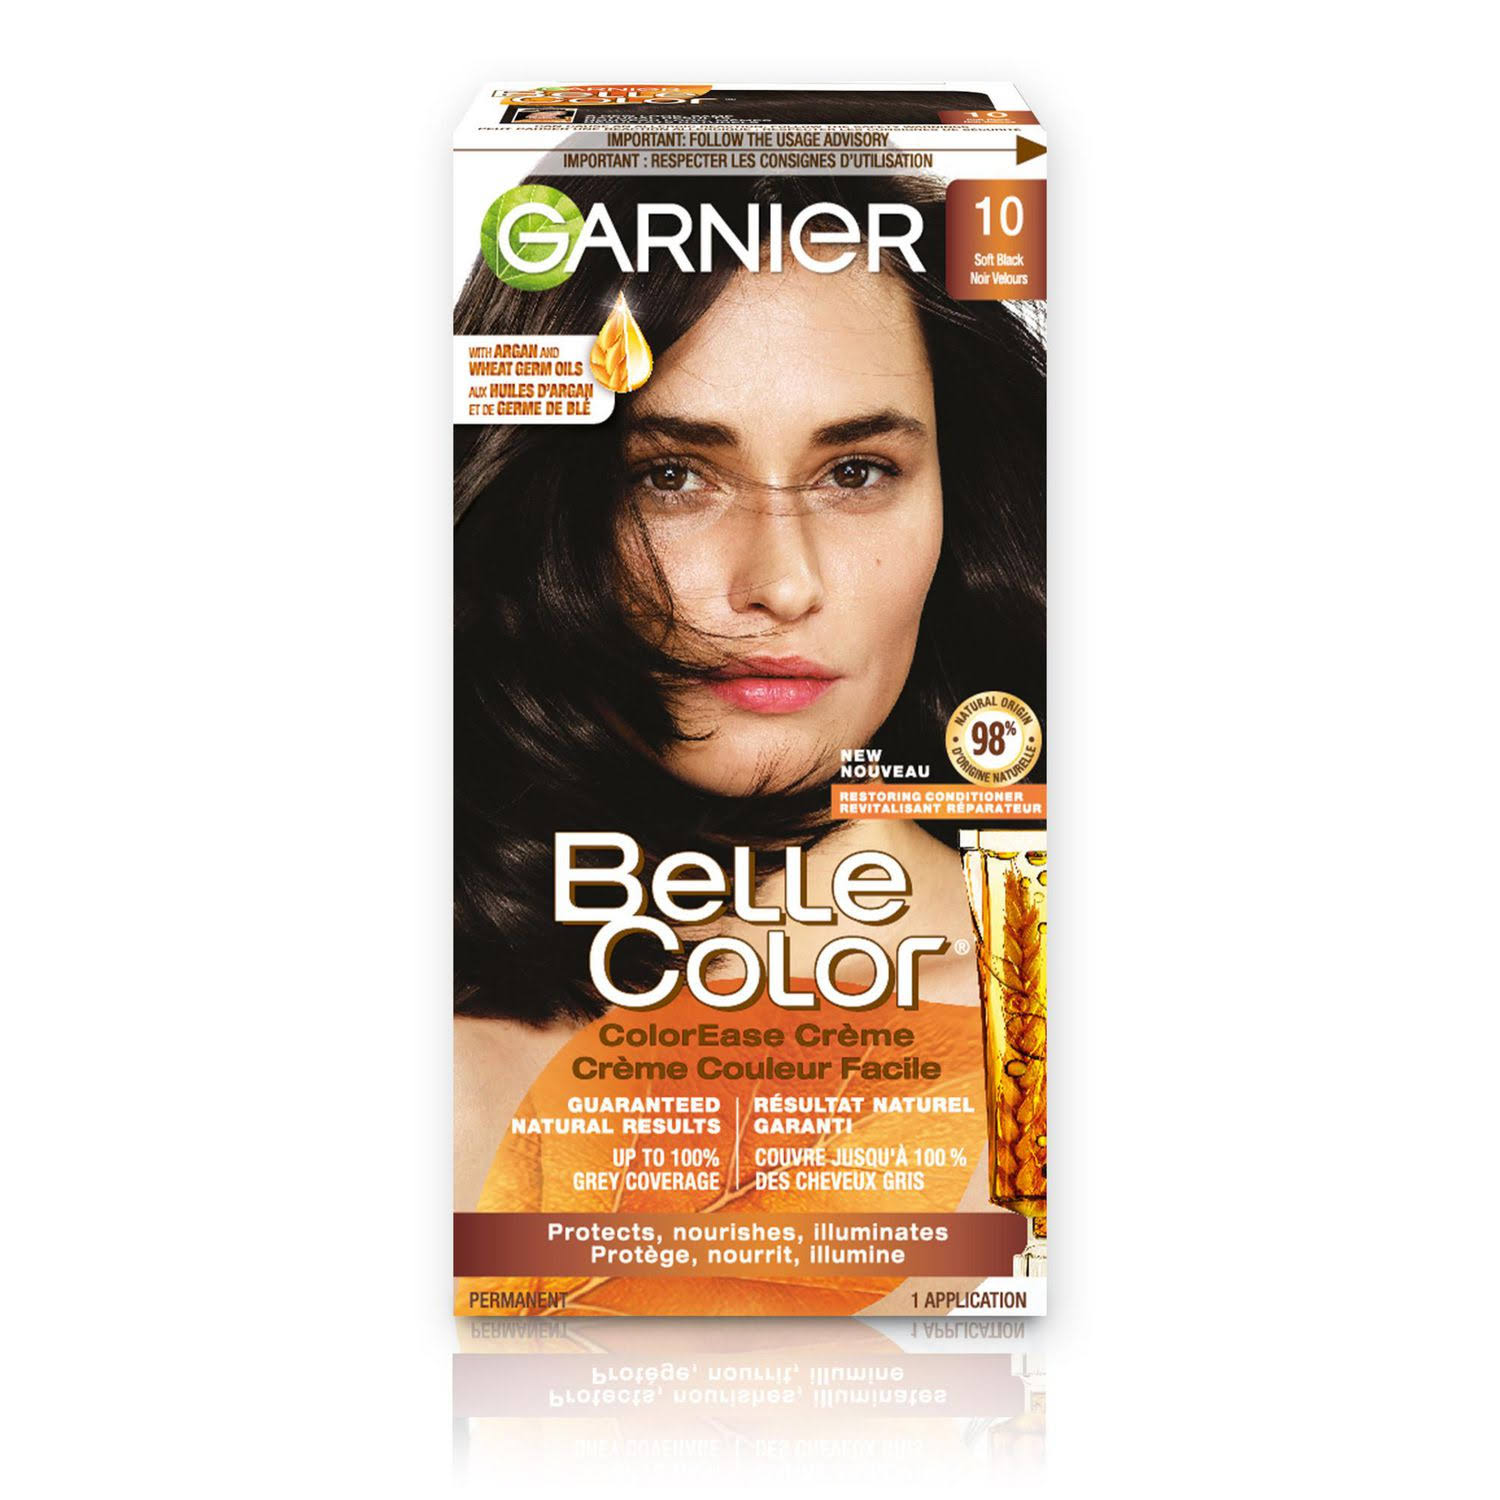 Garnier Belle Color ColorEase Creme, Soft Black 10